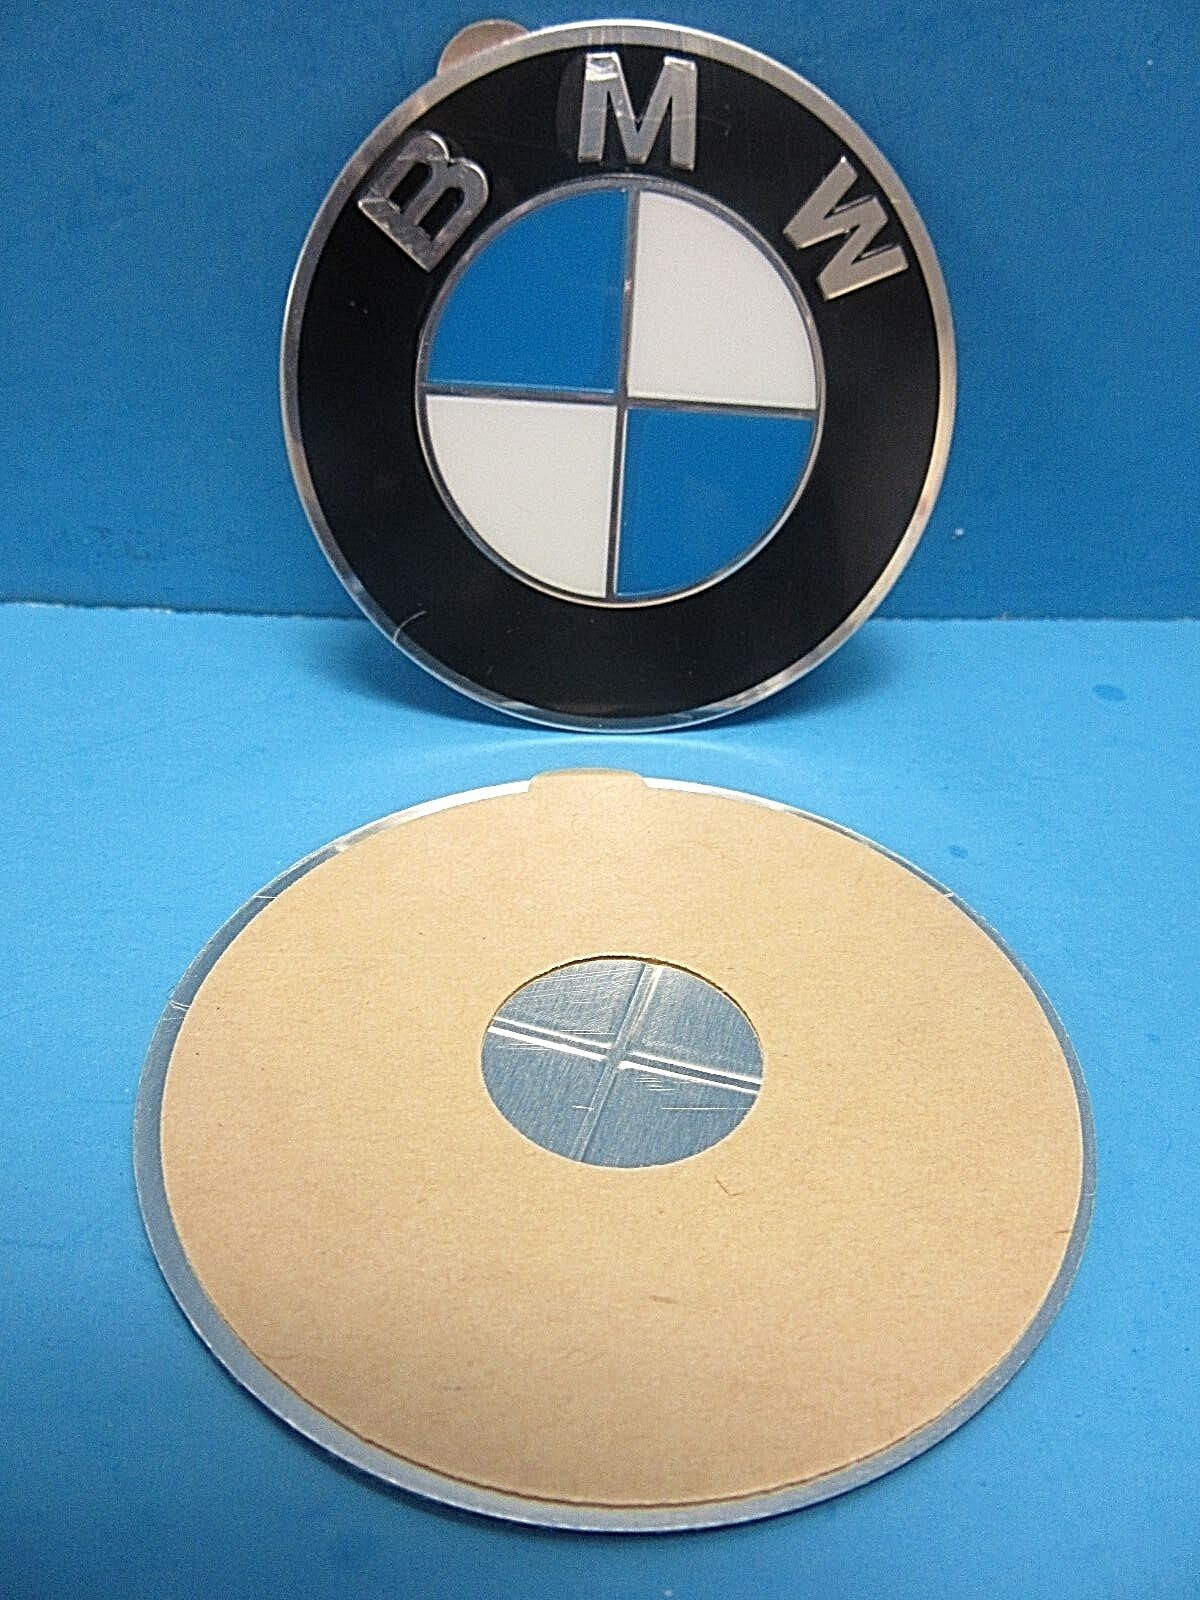 1 Genuine Wheel Center Cap Emblem BMW OEM # 36136758569 70.0mm 2.7